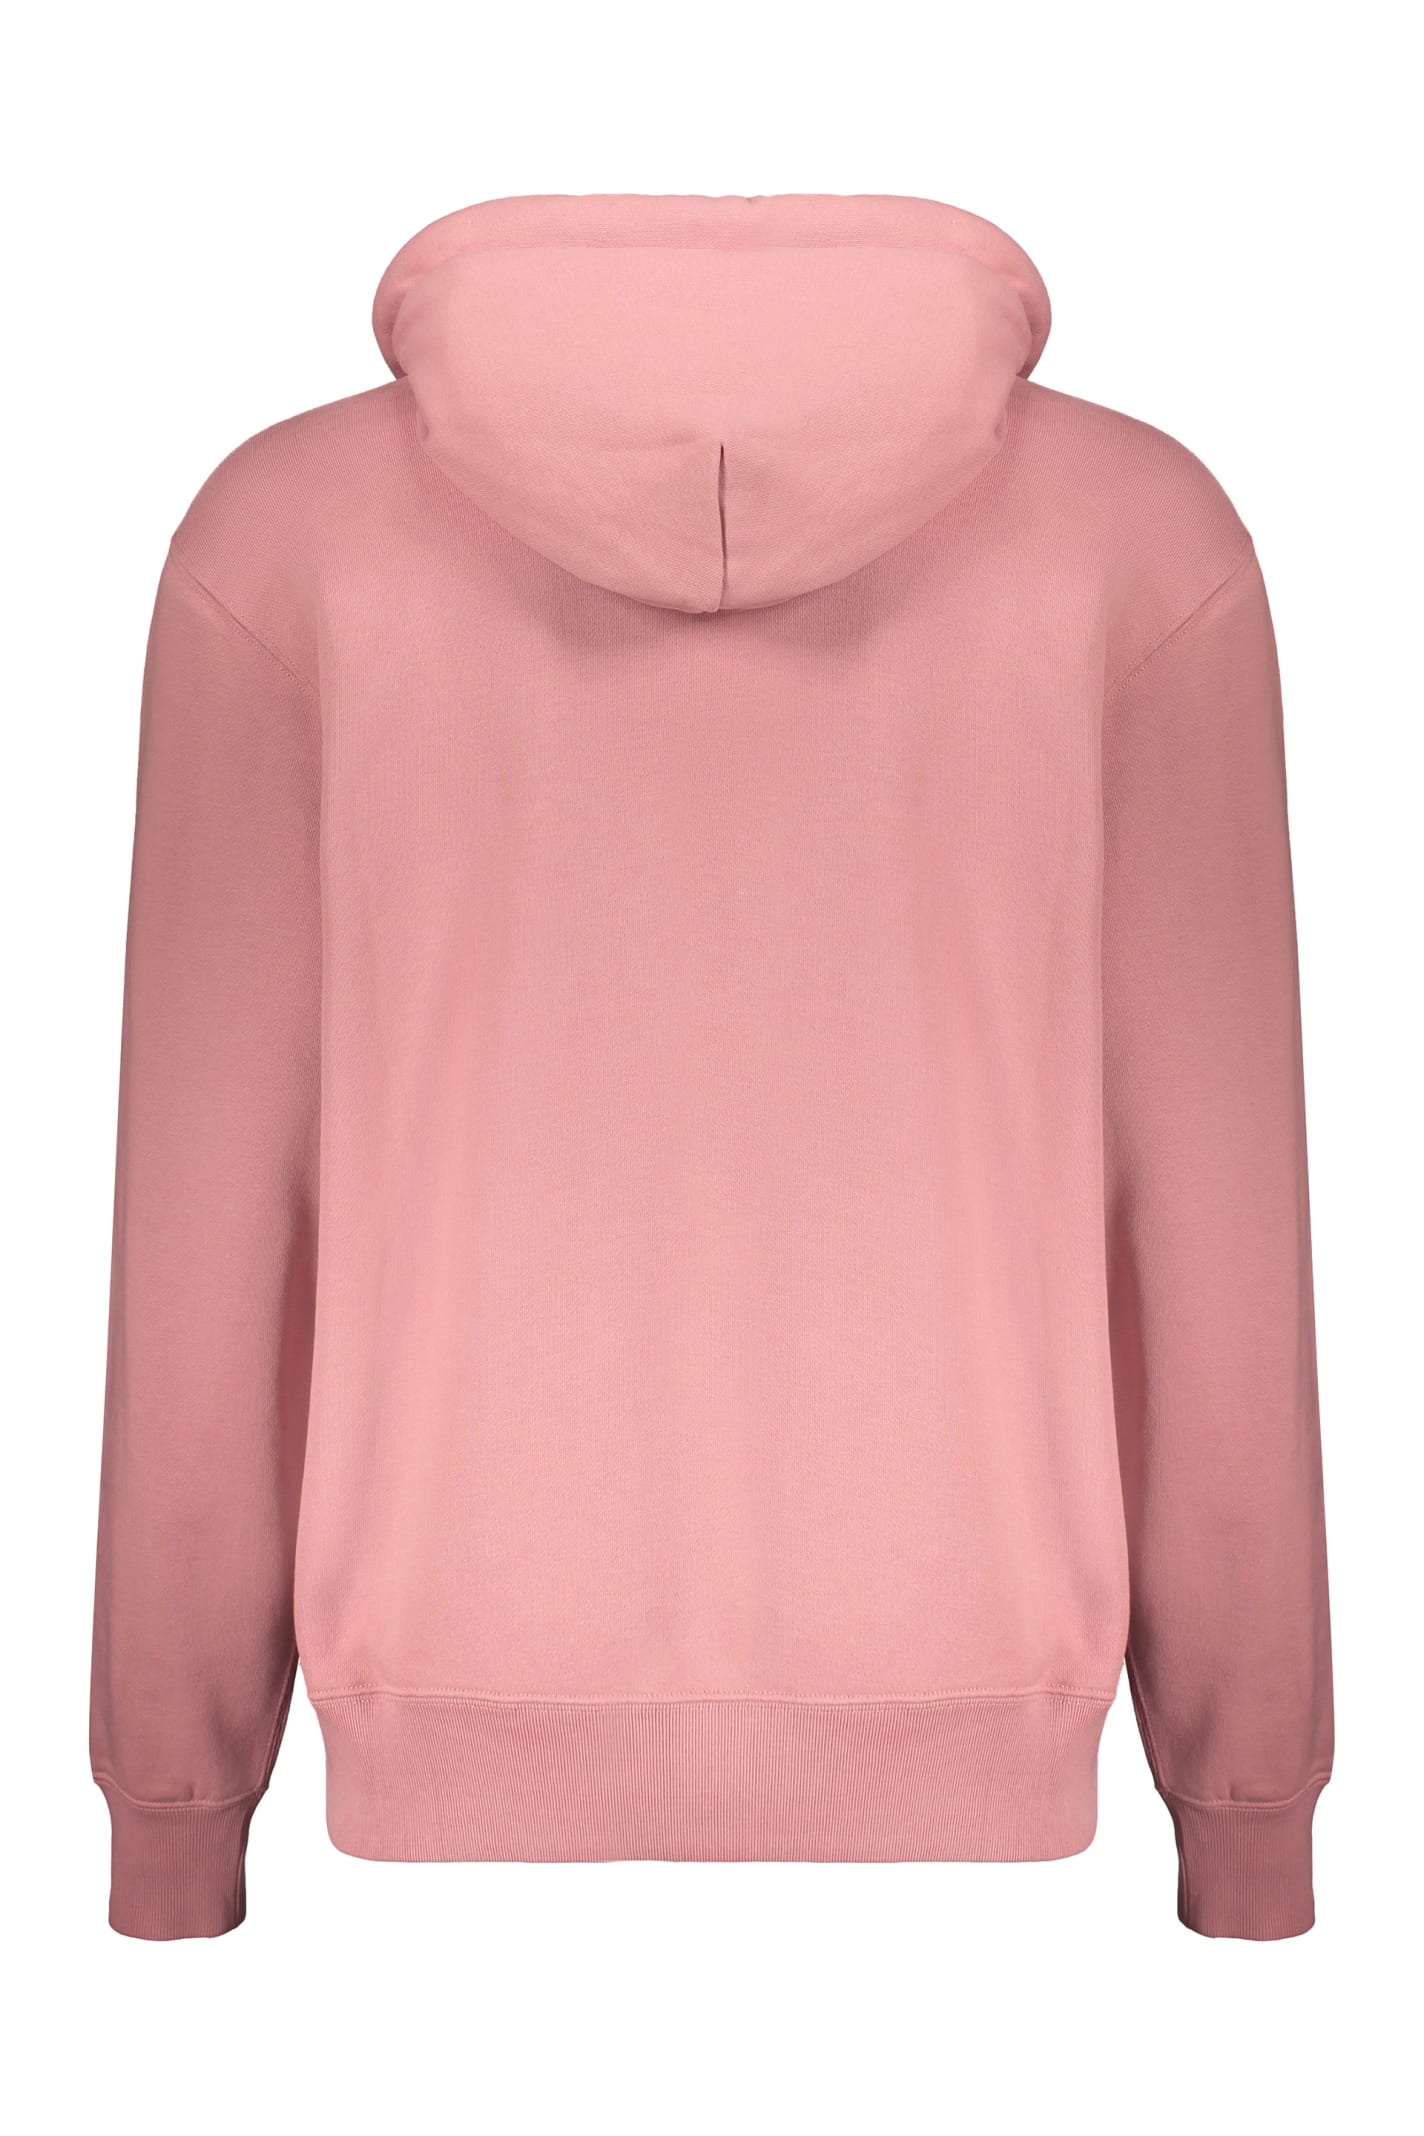 Shop Ambush Hooded Sweatshirt In Pink